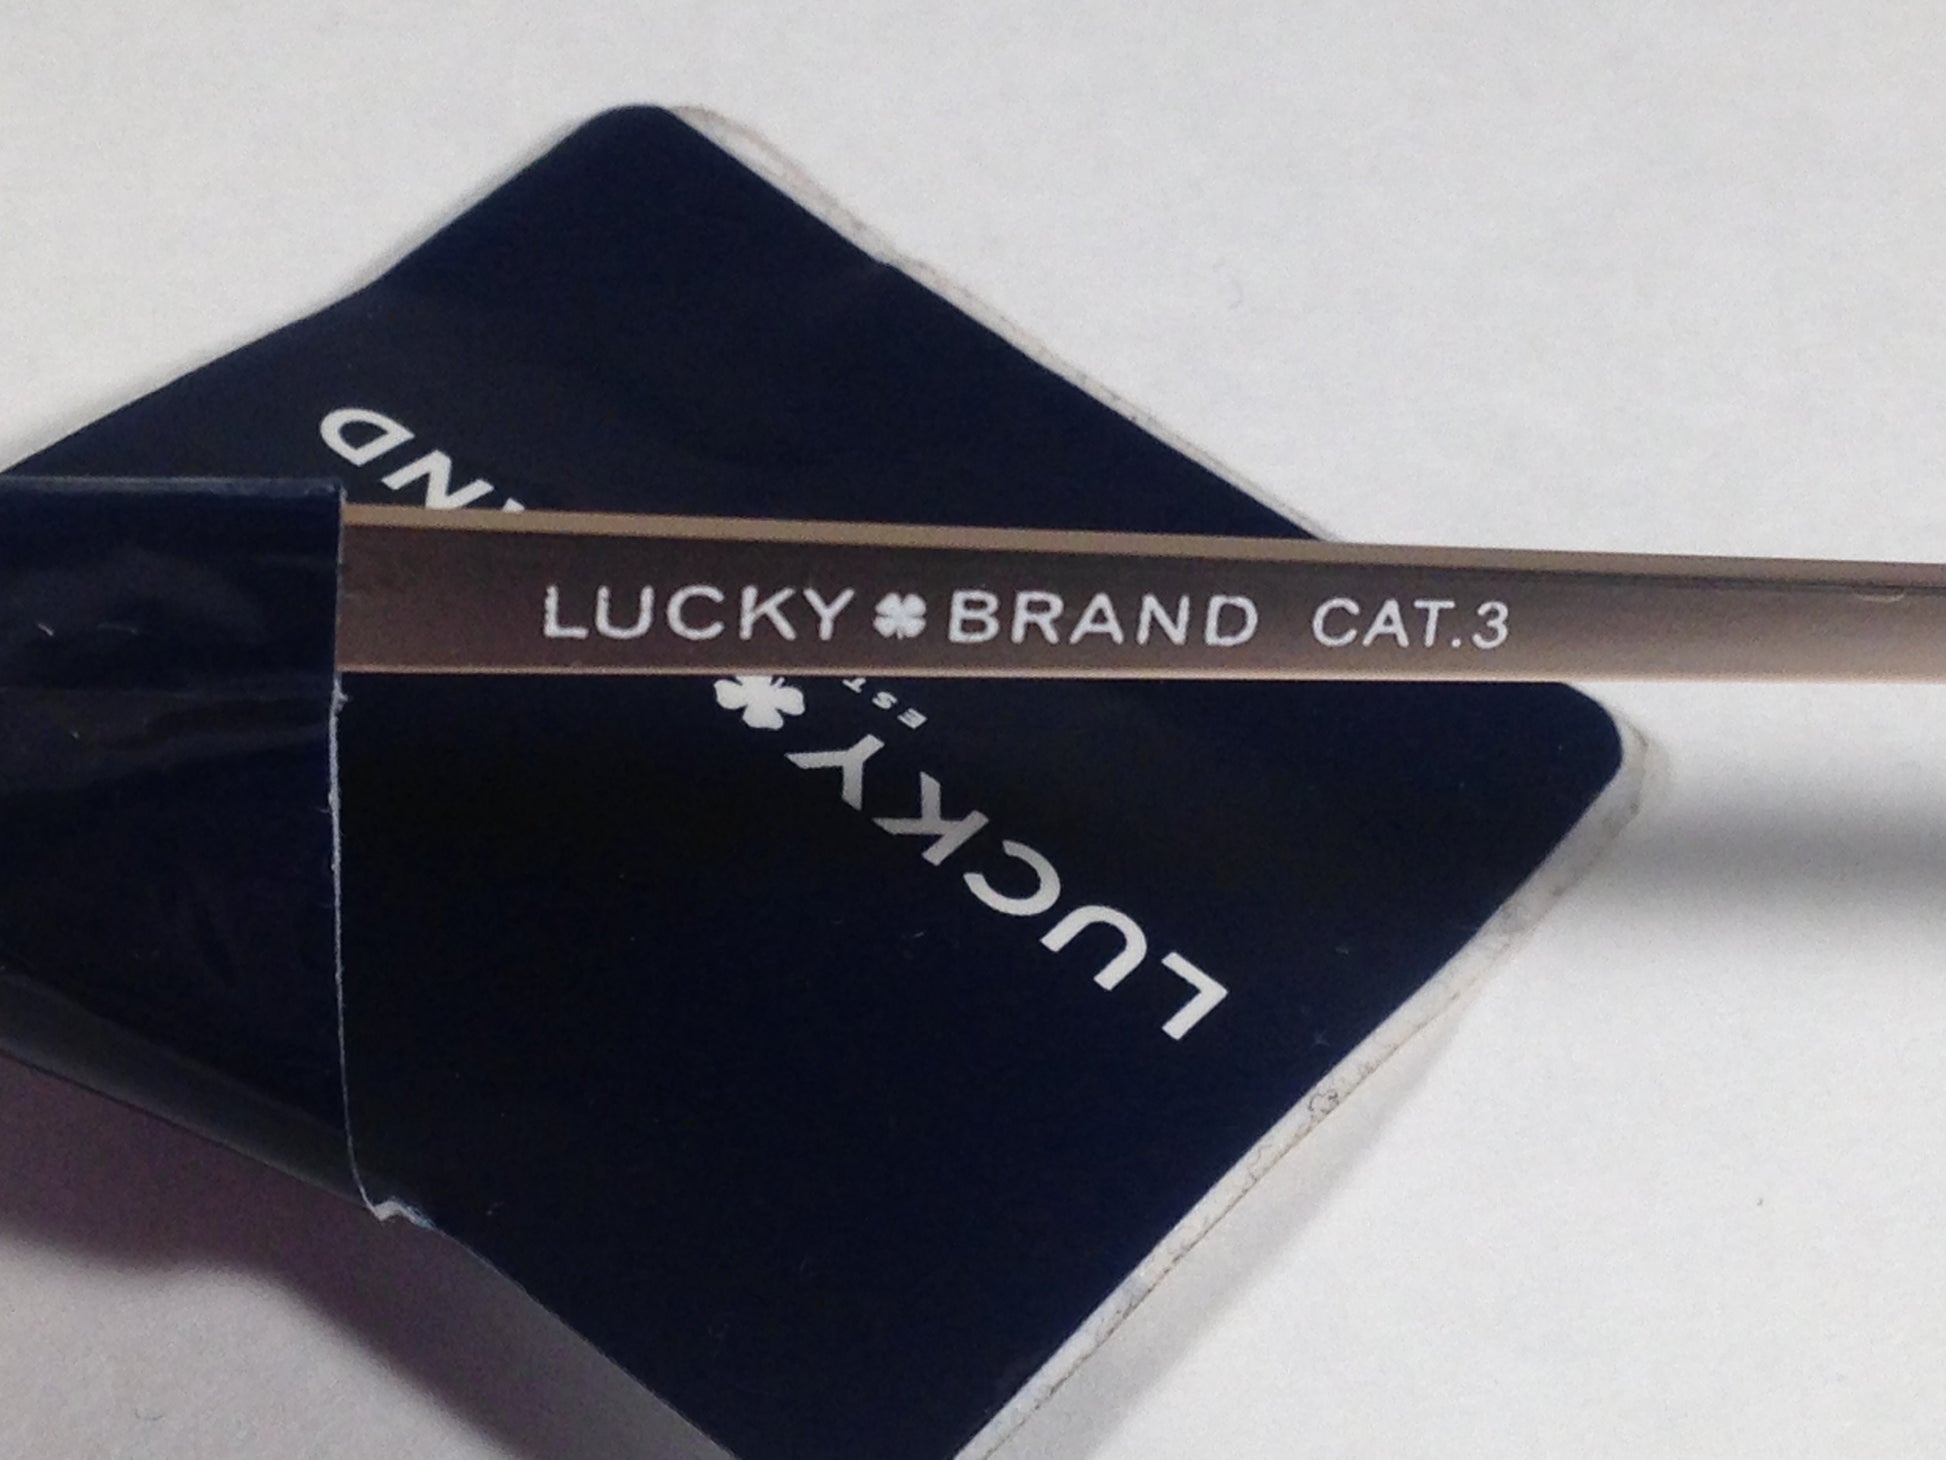 Lucky Brand Womens Round Aviator Sunglasses D926 Gold Black Gray Gradient Lens - Sunglasses